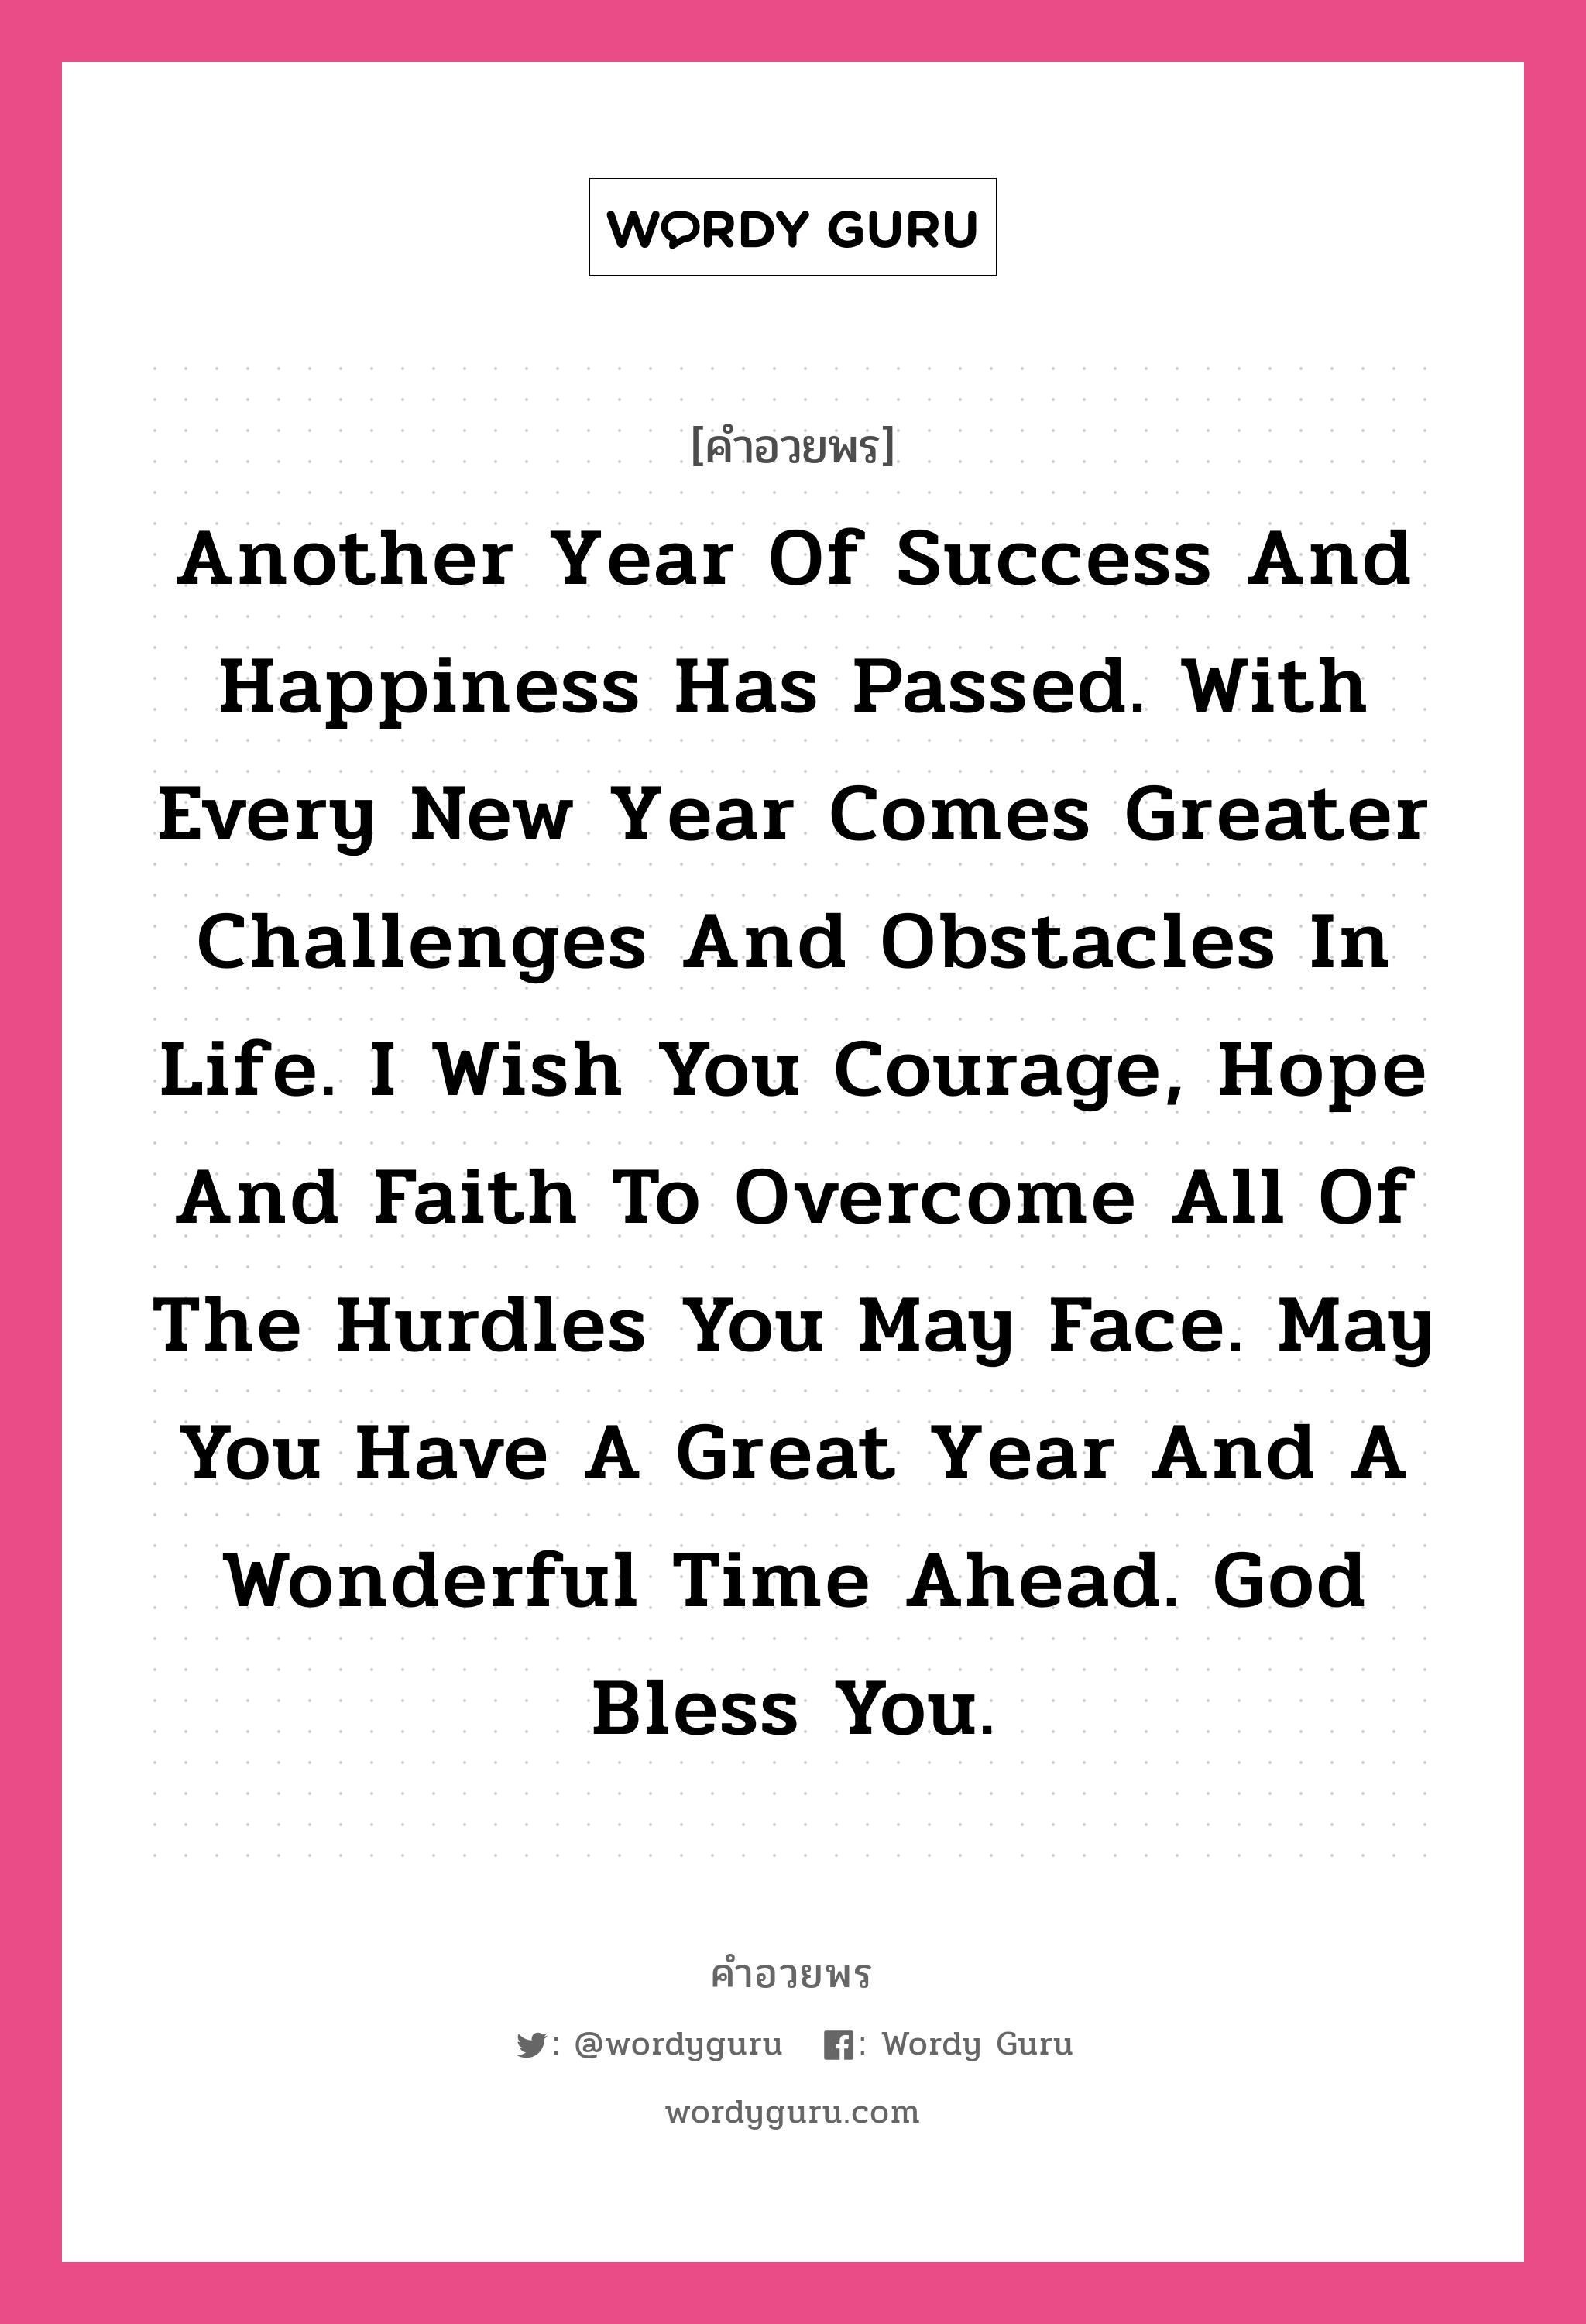 Another year of success and happiness has passed. With every new year comes greater challenges and obstacles in life. I wish you courage, hope and faith to overcome all of the hurdles you may face. May you have a great year and a wonderful time ahead. God bless you. คำศัพท์ในกลุ่มประเภท คำอวยพรวันคริสต์มาส, แปลว่า หนึ่งปีแห่งความสุขและความสำเร็จได้ล่วงผ่านไป พร้อมปีใหม่ที่ก้าวเข้ามากับอุปสรรคและความท้าทายใหม่ในชีวิต ขอให้คุณจงมีความกล้า ความหวัง และศรัทธา เอาได้ชนะทุกปัญหาที่ต้องเผชิญ ขอให้ปีใหม่นี้เป็นปีพิเศษและมีช่วงเวลาแสนอัศจรรย์ ขอพระเจ้าอวยพรแด่คุณนะ หมวด คำอวยพรวันคริสต์มาส หมวด คำอวยพรวันคริสต์มาส